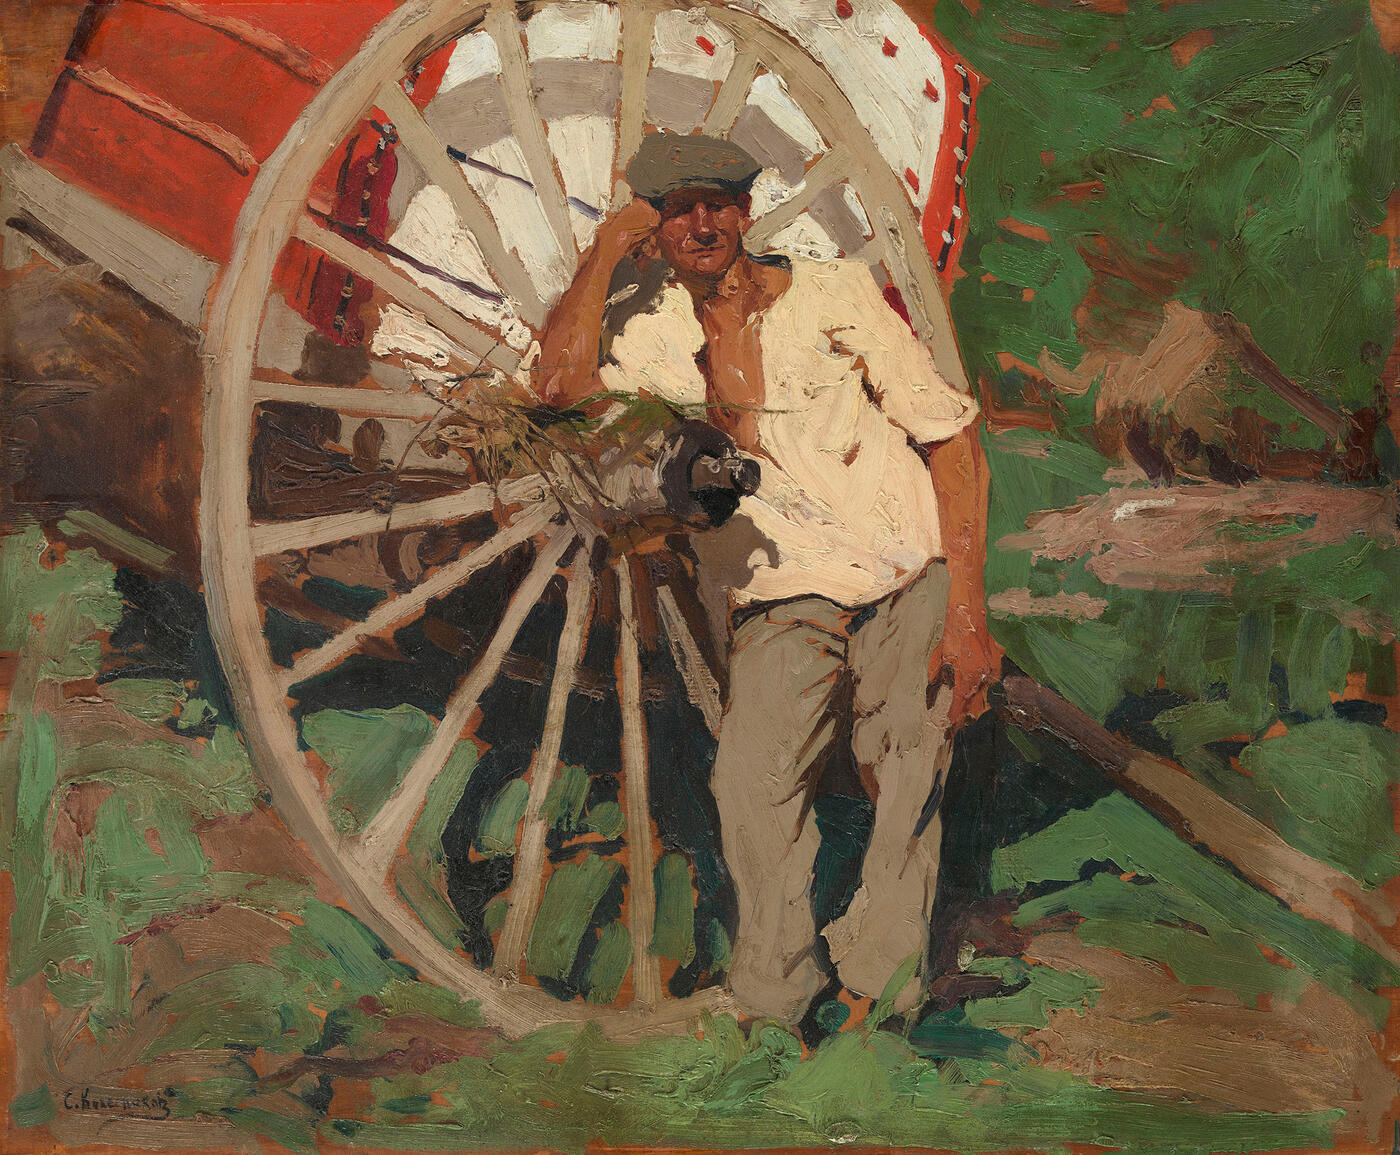 Peasant by a Wagon Wheel